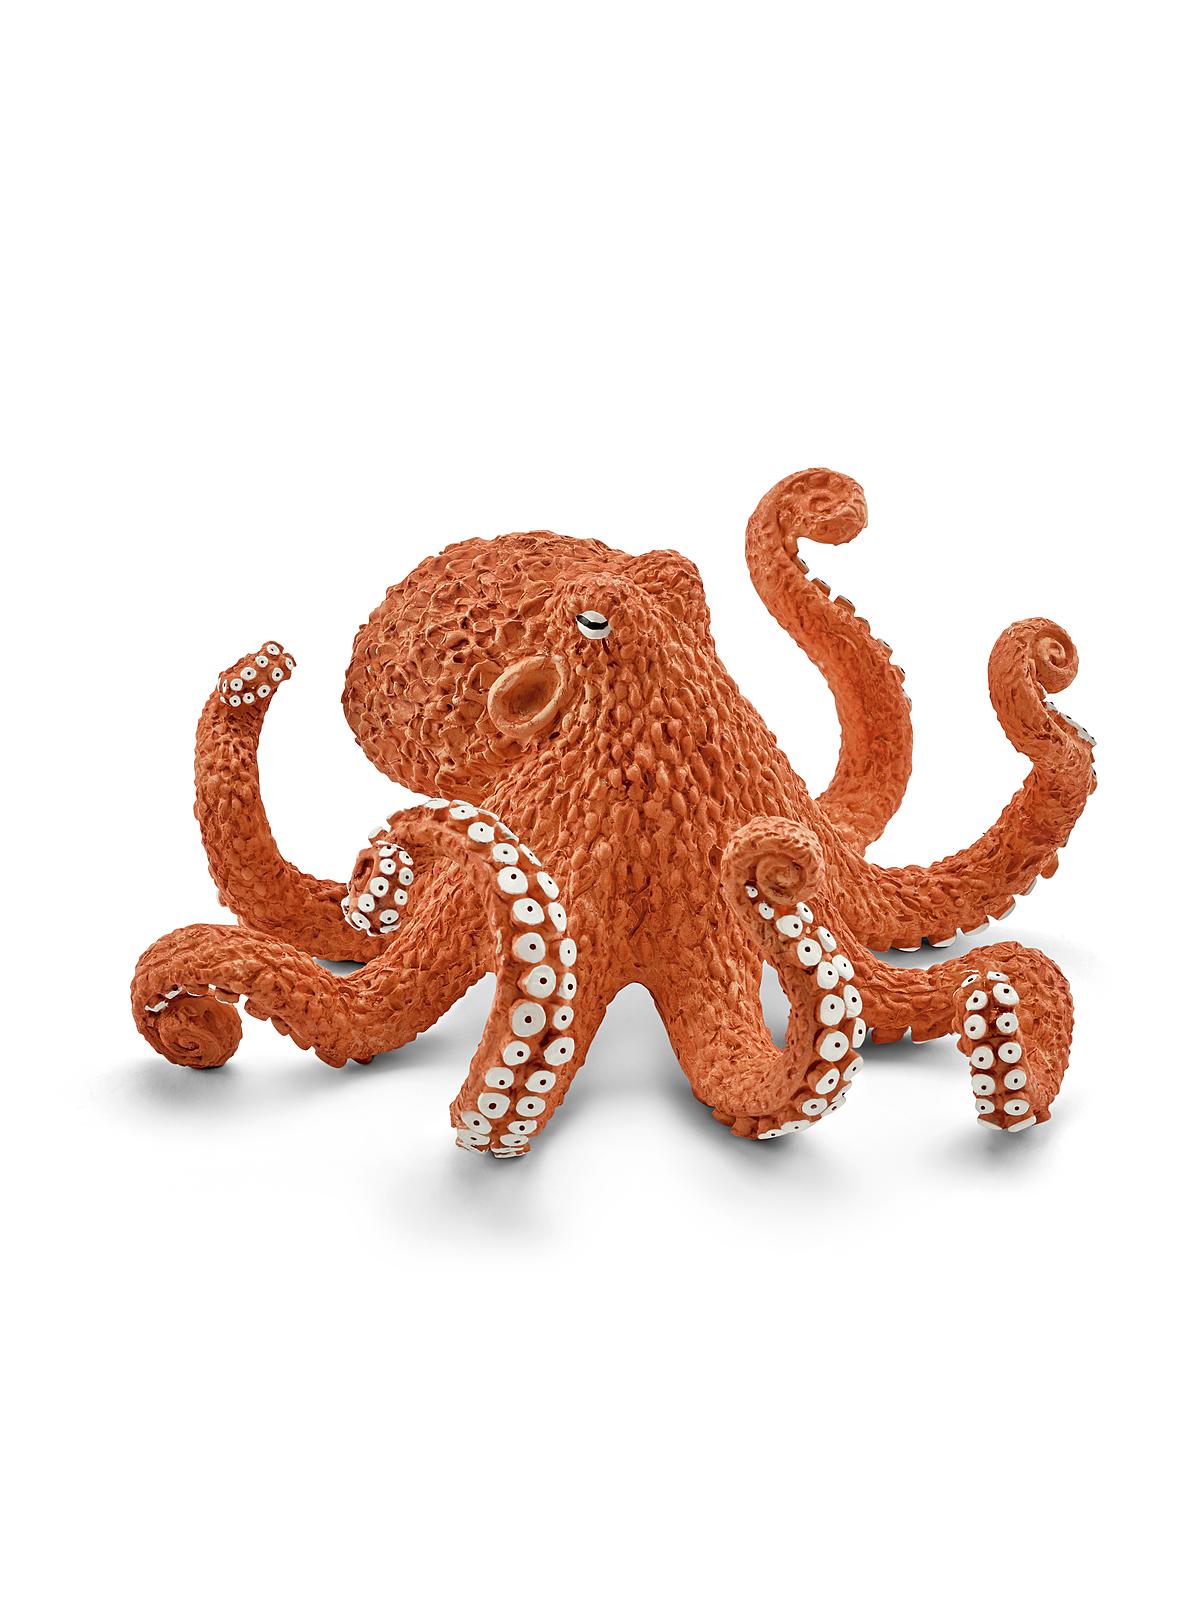 Wild Life Animals Octopus